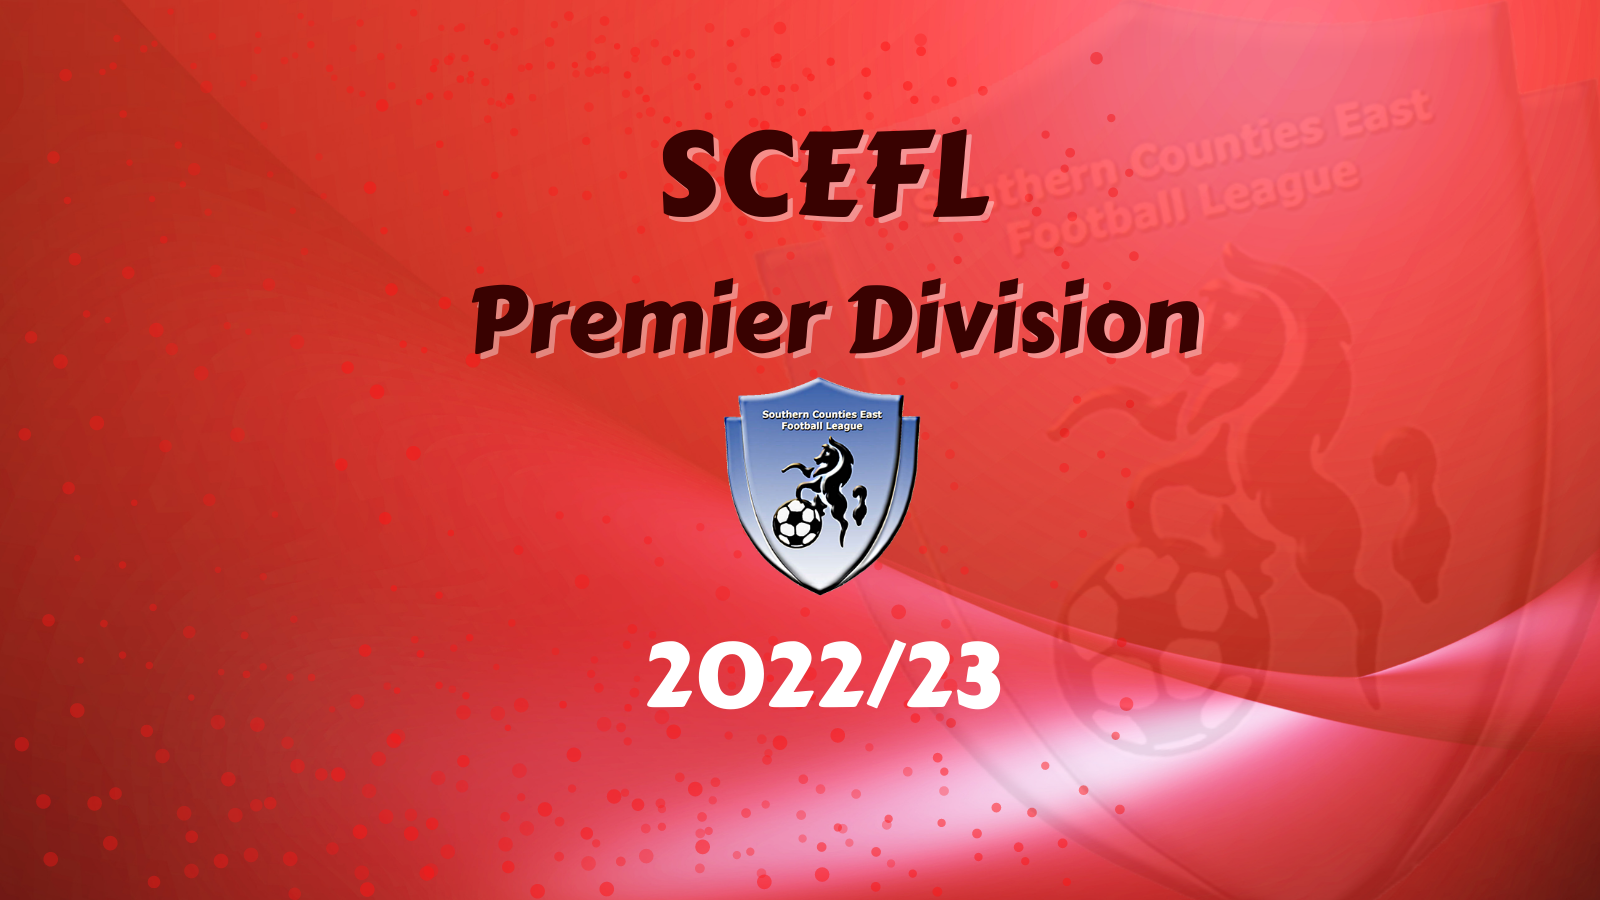 SCEFL Premier Division 2022/23